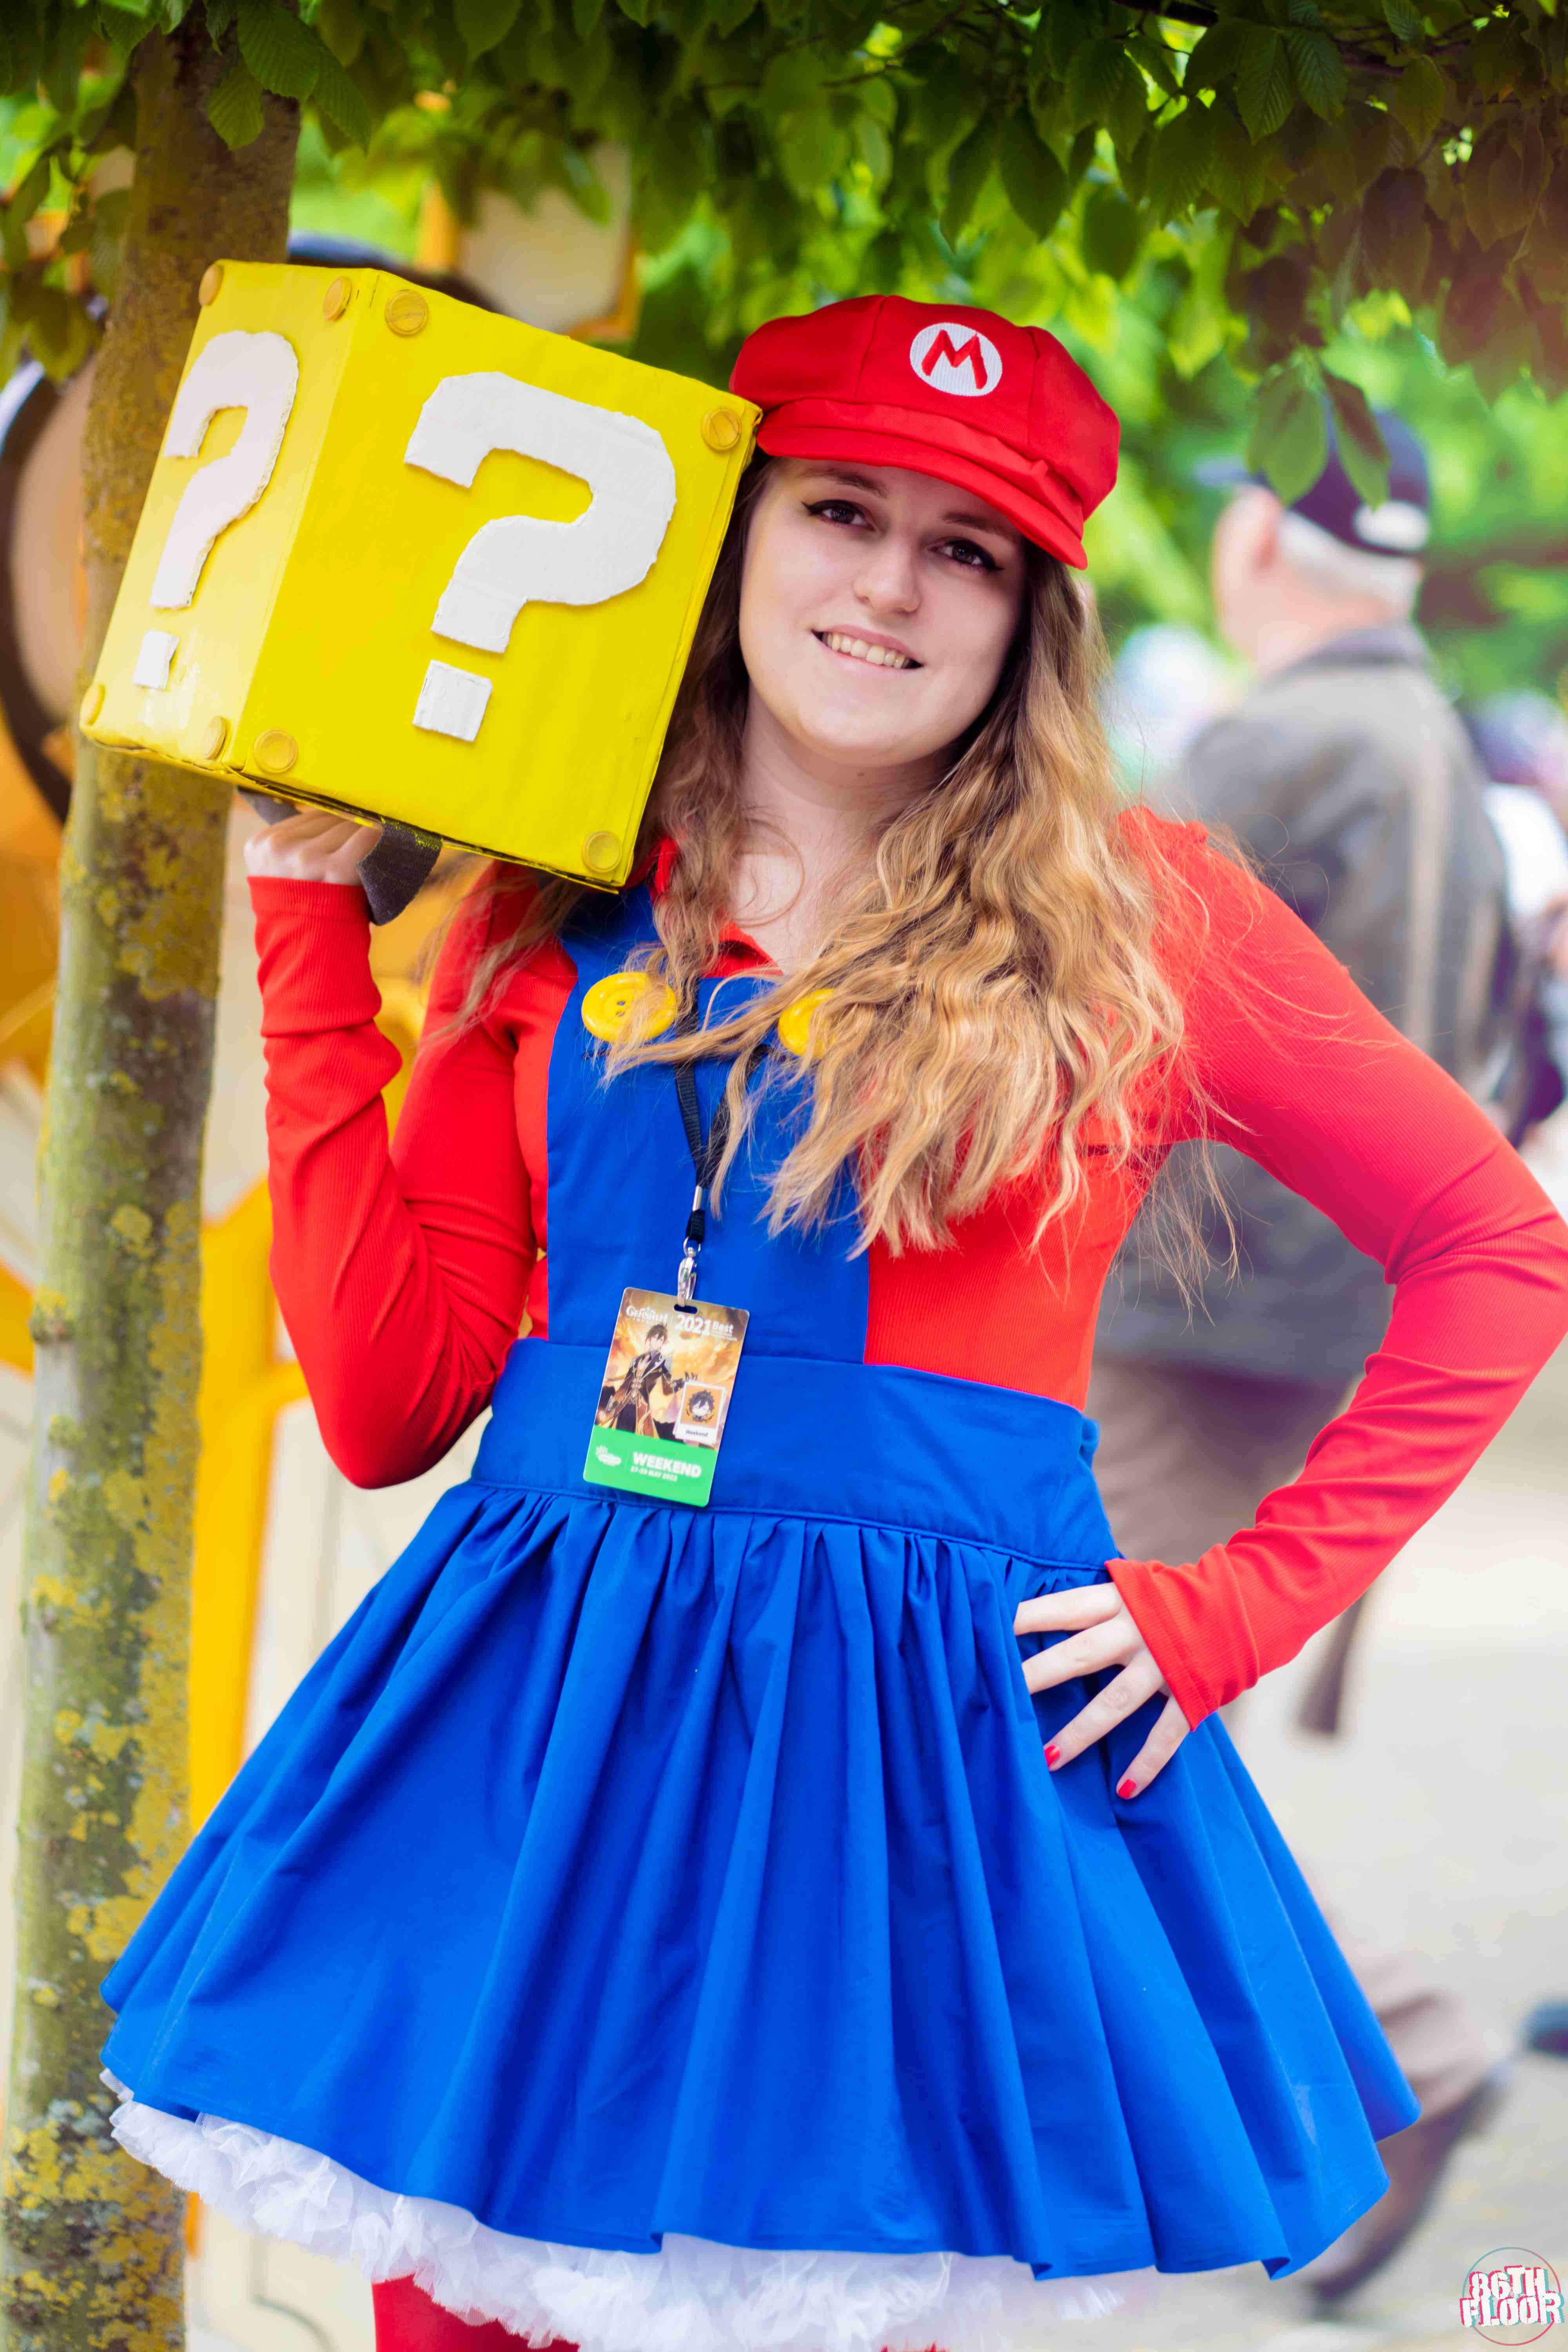 Video Game Supercut - Super Mario cosplayer